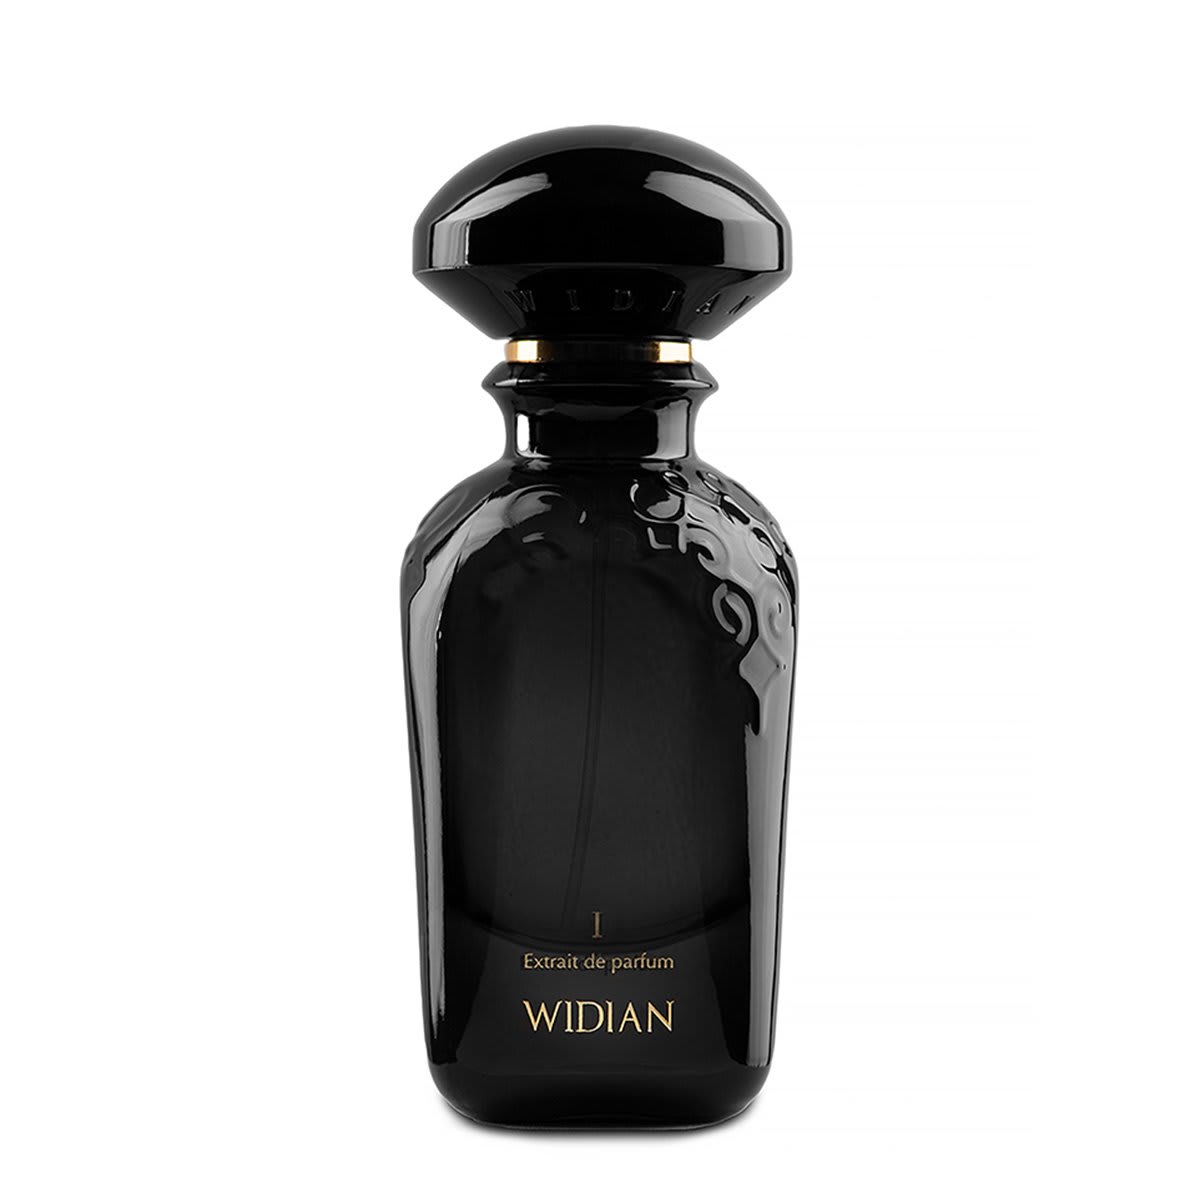 Widian Black I Parfum